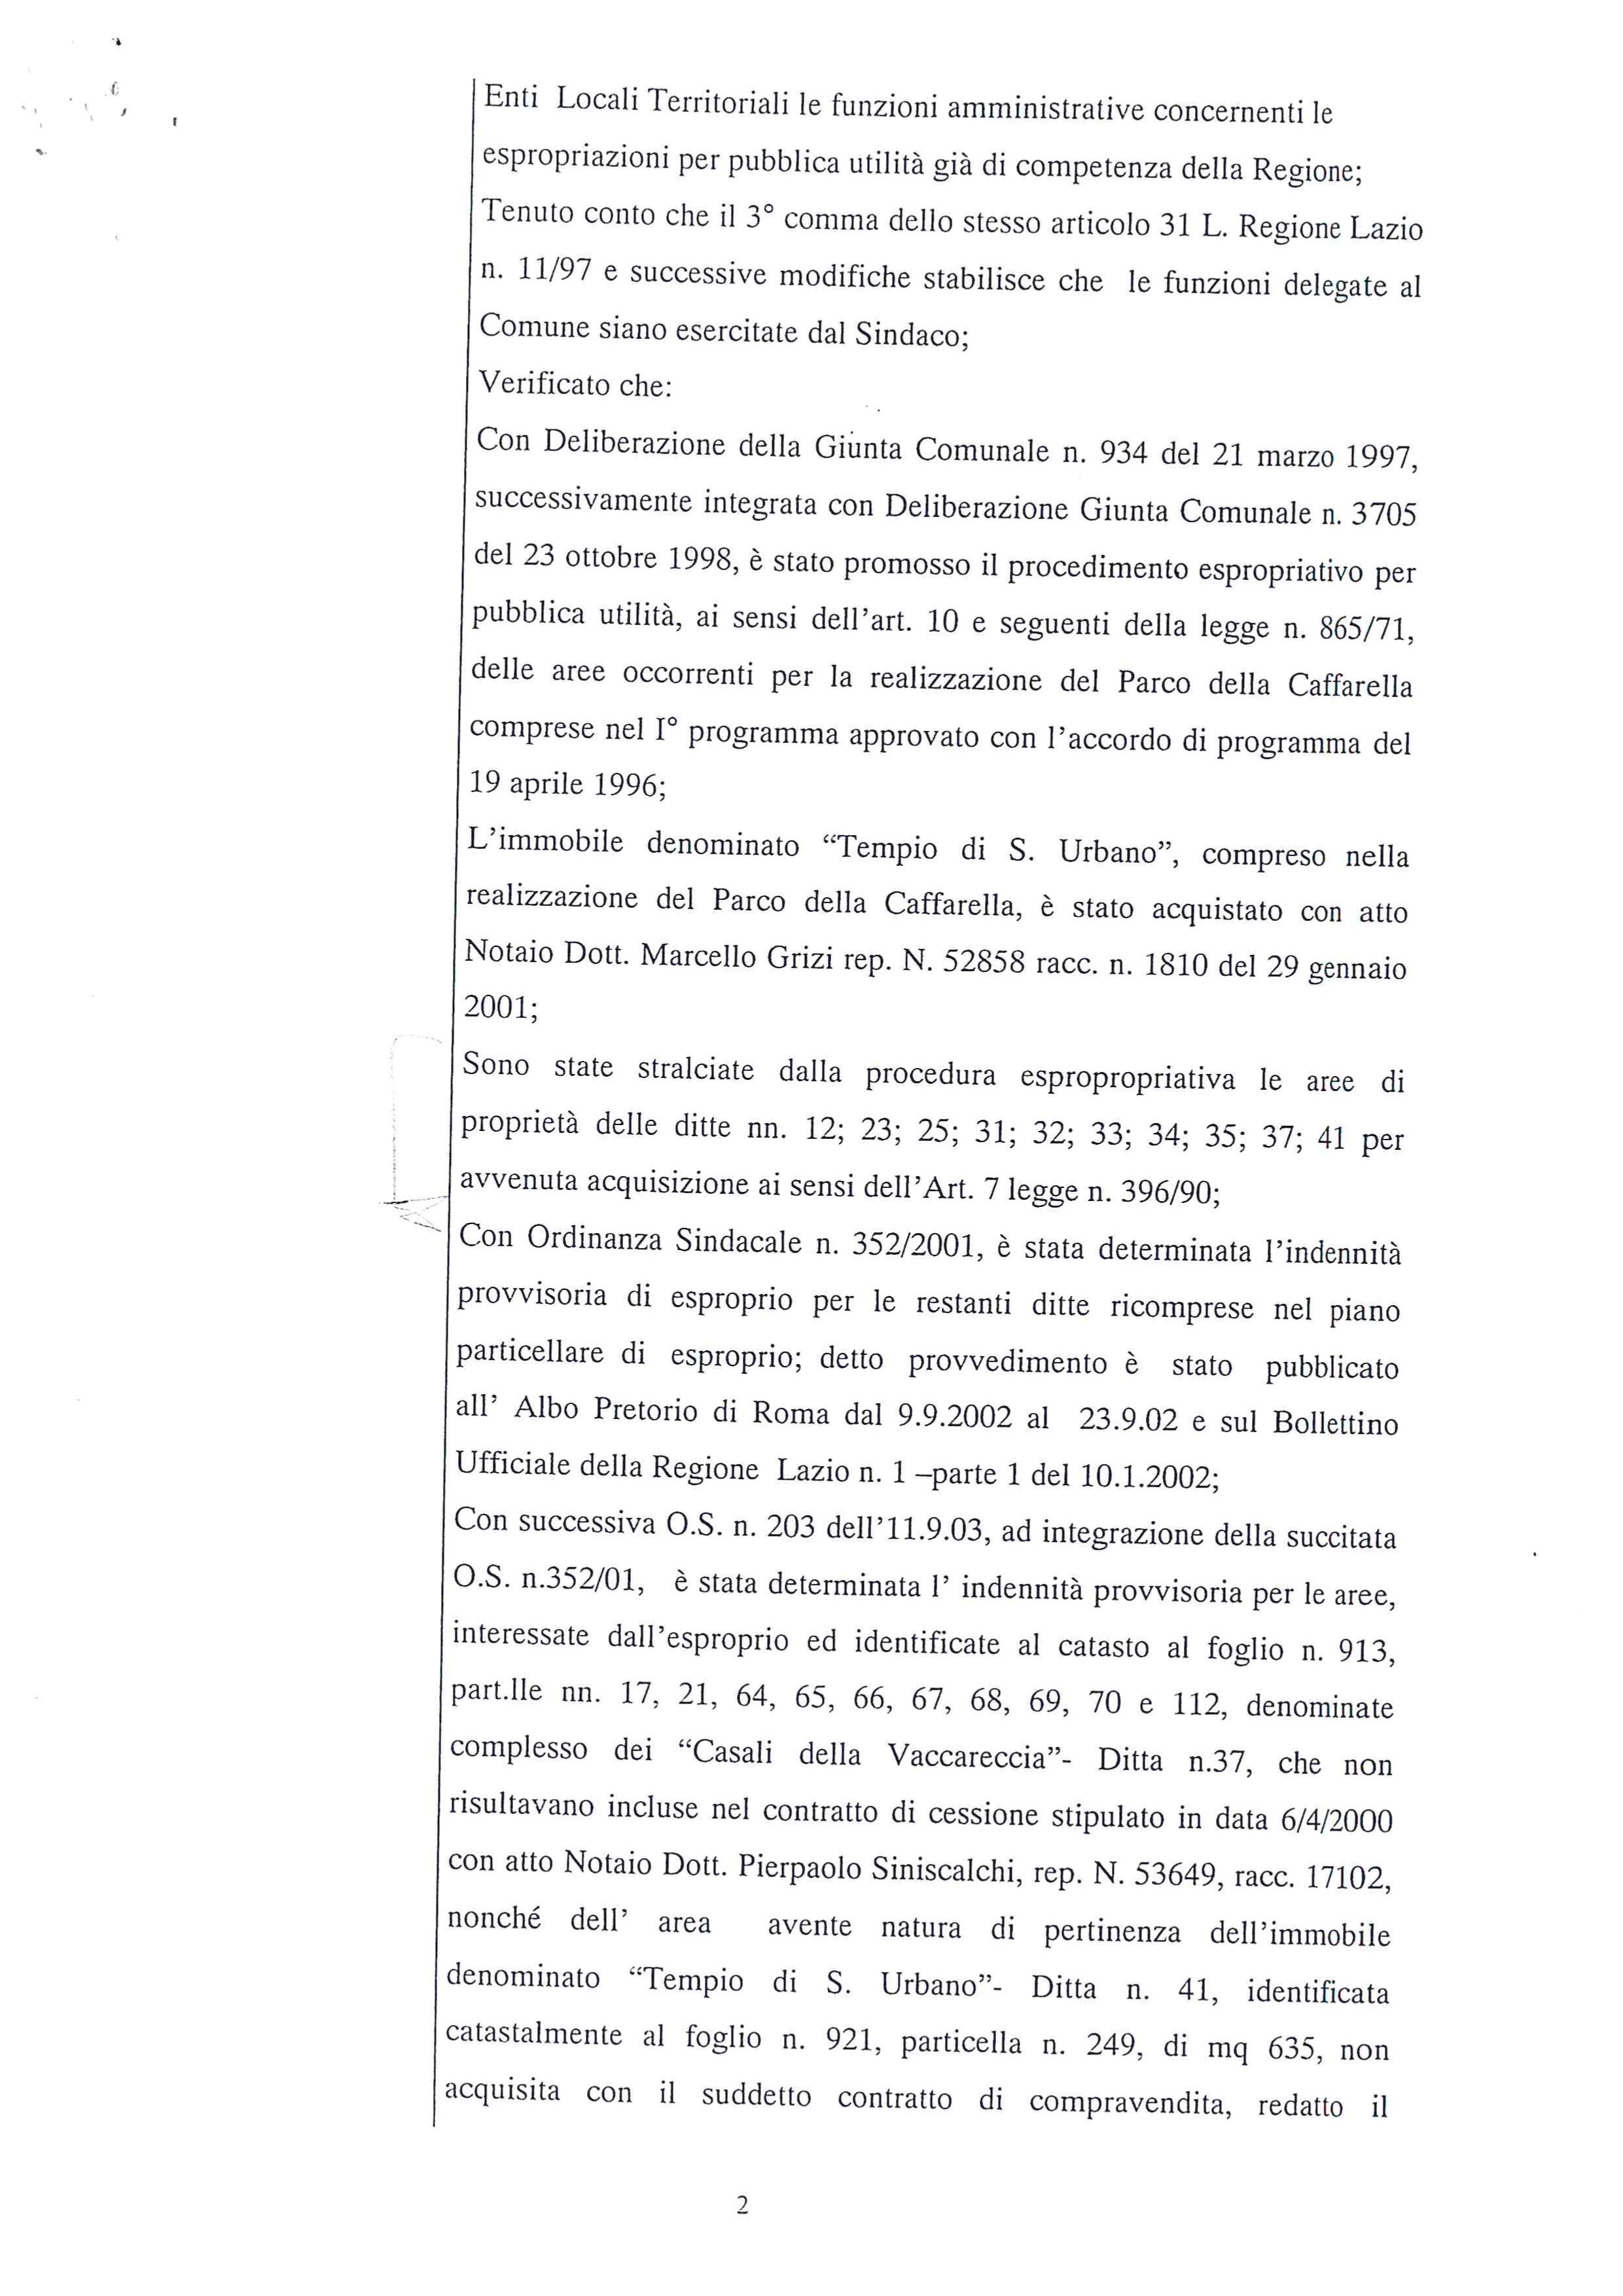 2005 Decreto esproprio Veltroni 9